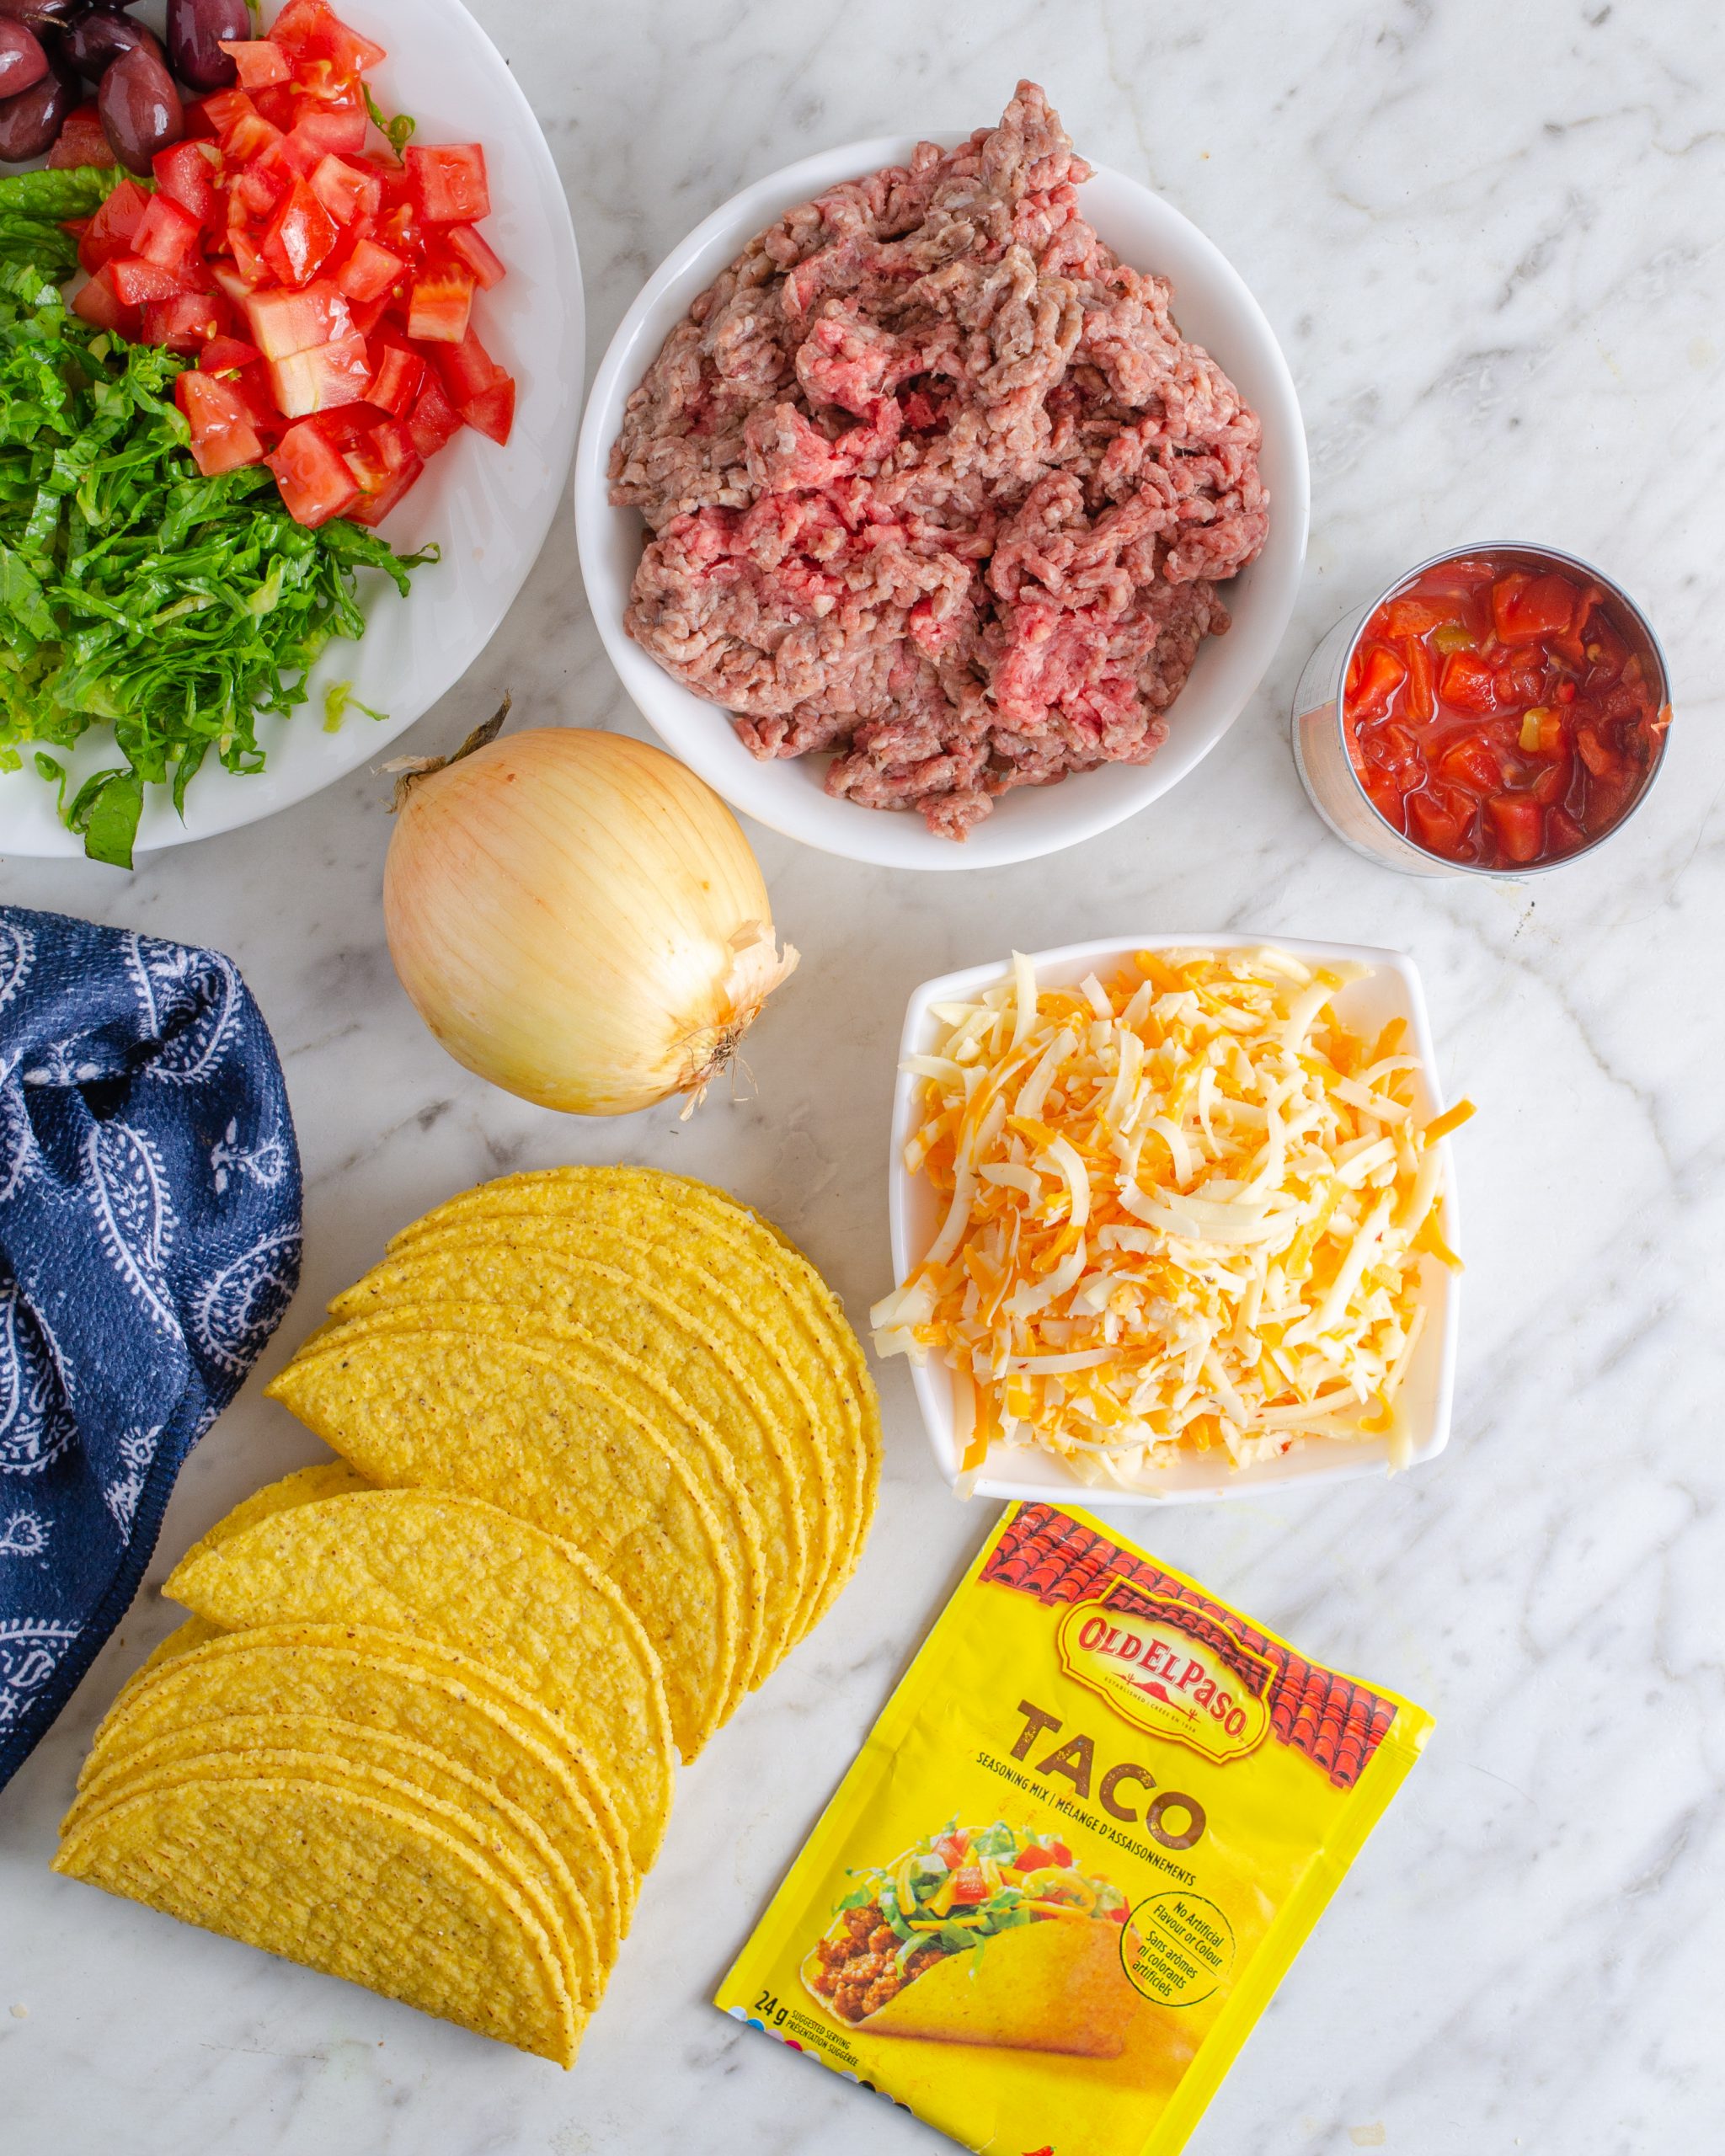 Taco Oven Bake ingredients